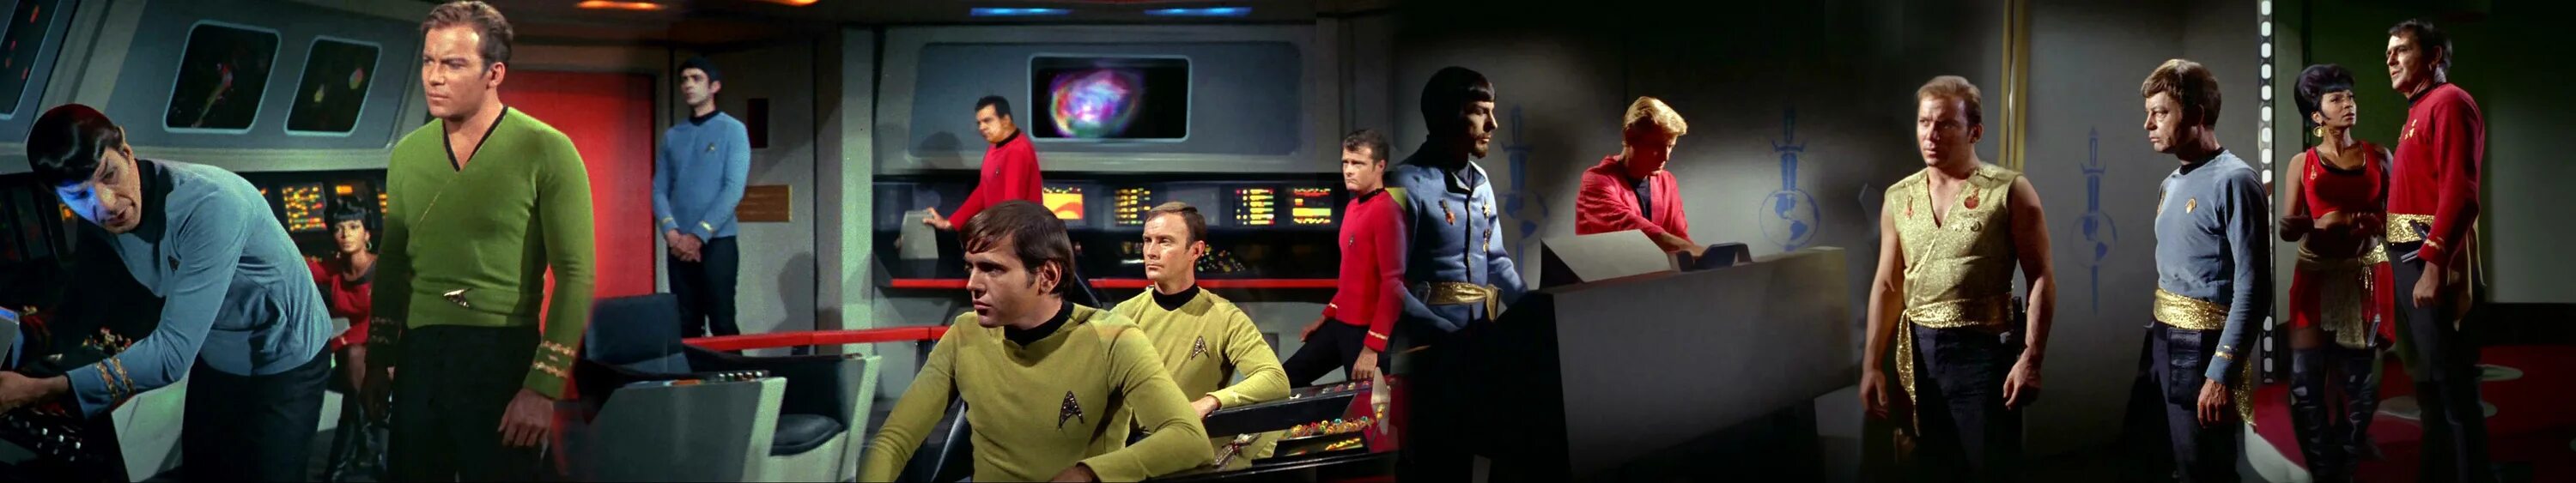 Star Trek Monitor. Star Trek 3 лица фон рабочего стола. Обои для двух мониторов 1920х1080 Star Trek. Desk Star Trek. Код 8 в качество 1080